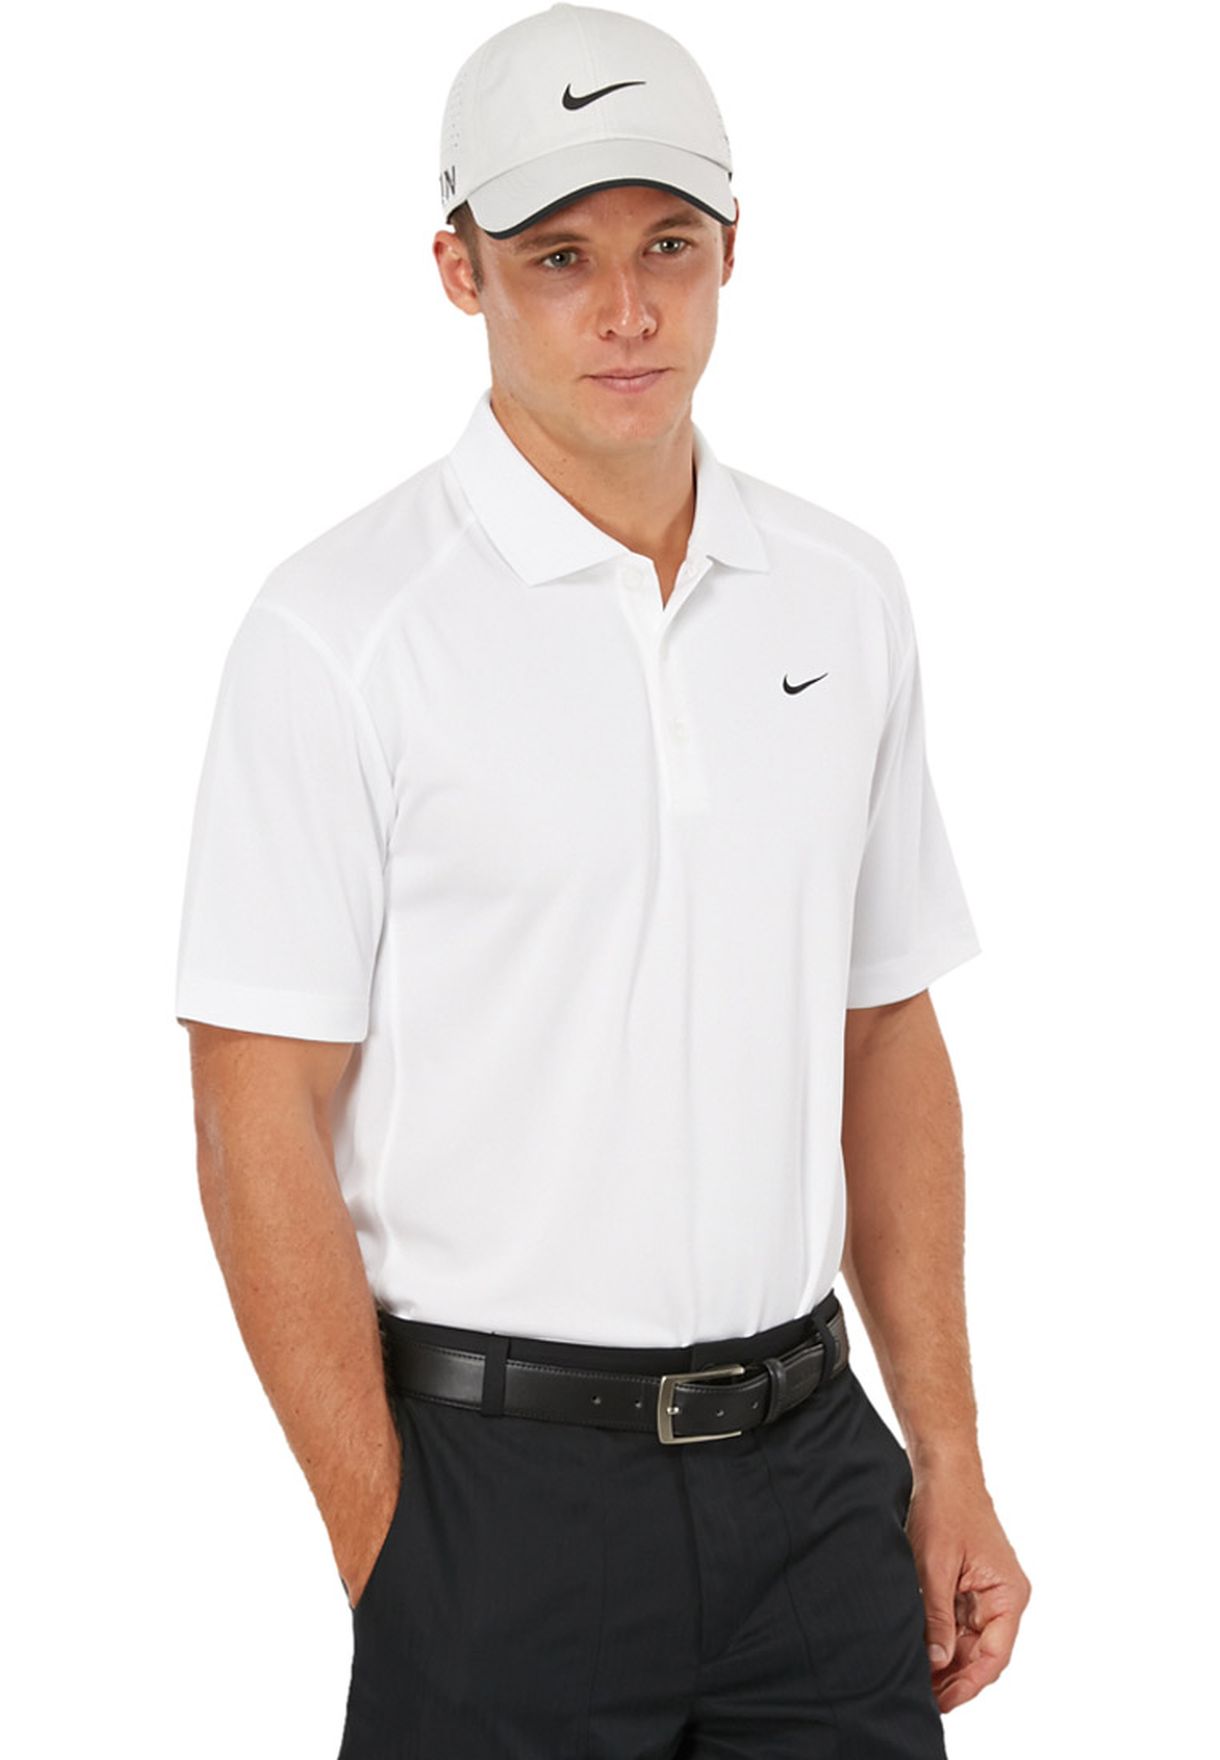 buy nike golf shirts online